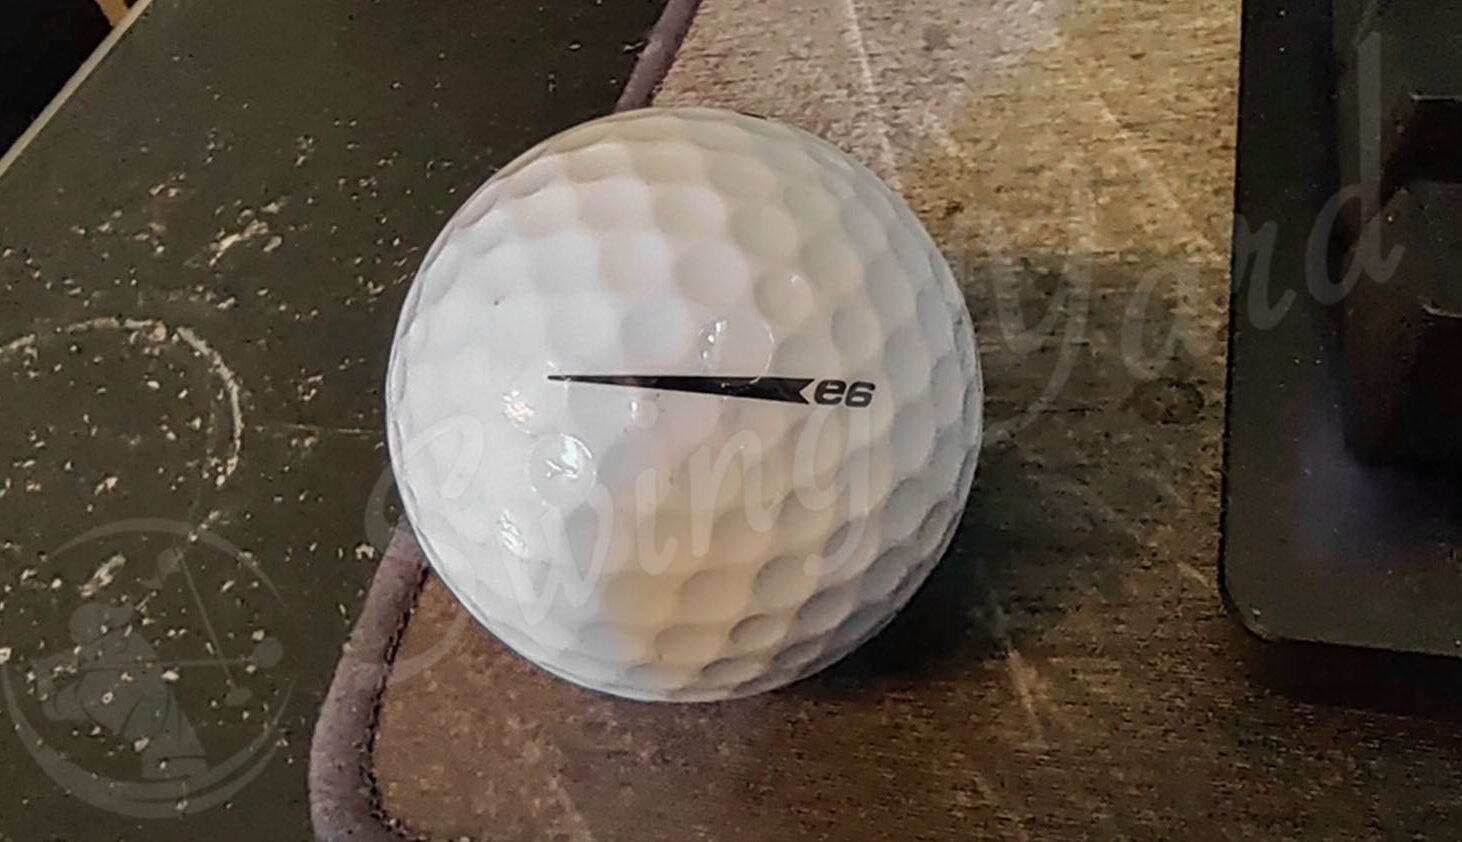 A Bridgestone e6 ball in the floor at the golf simulation room